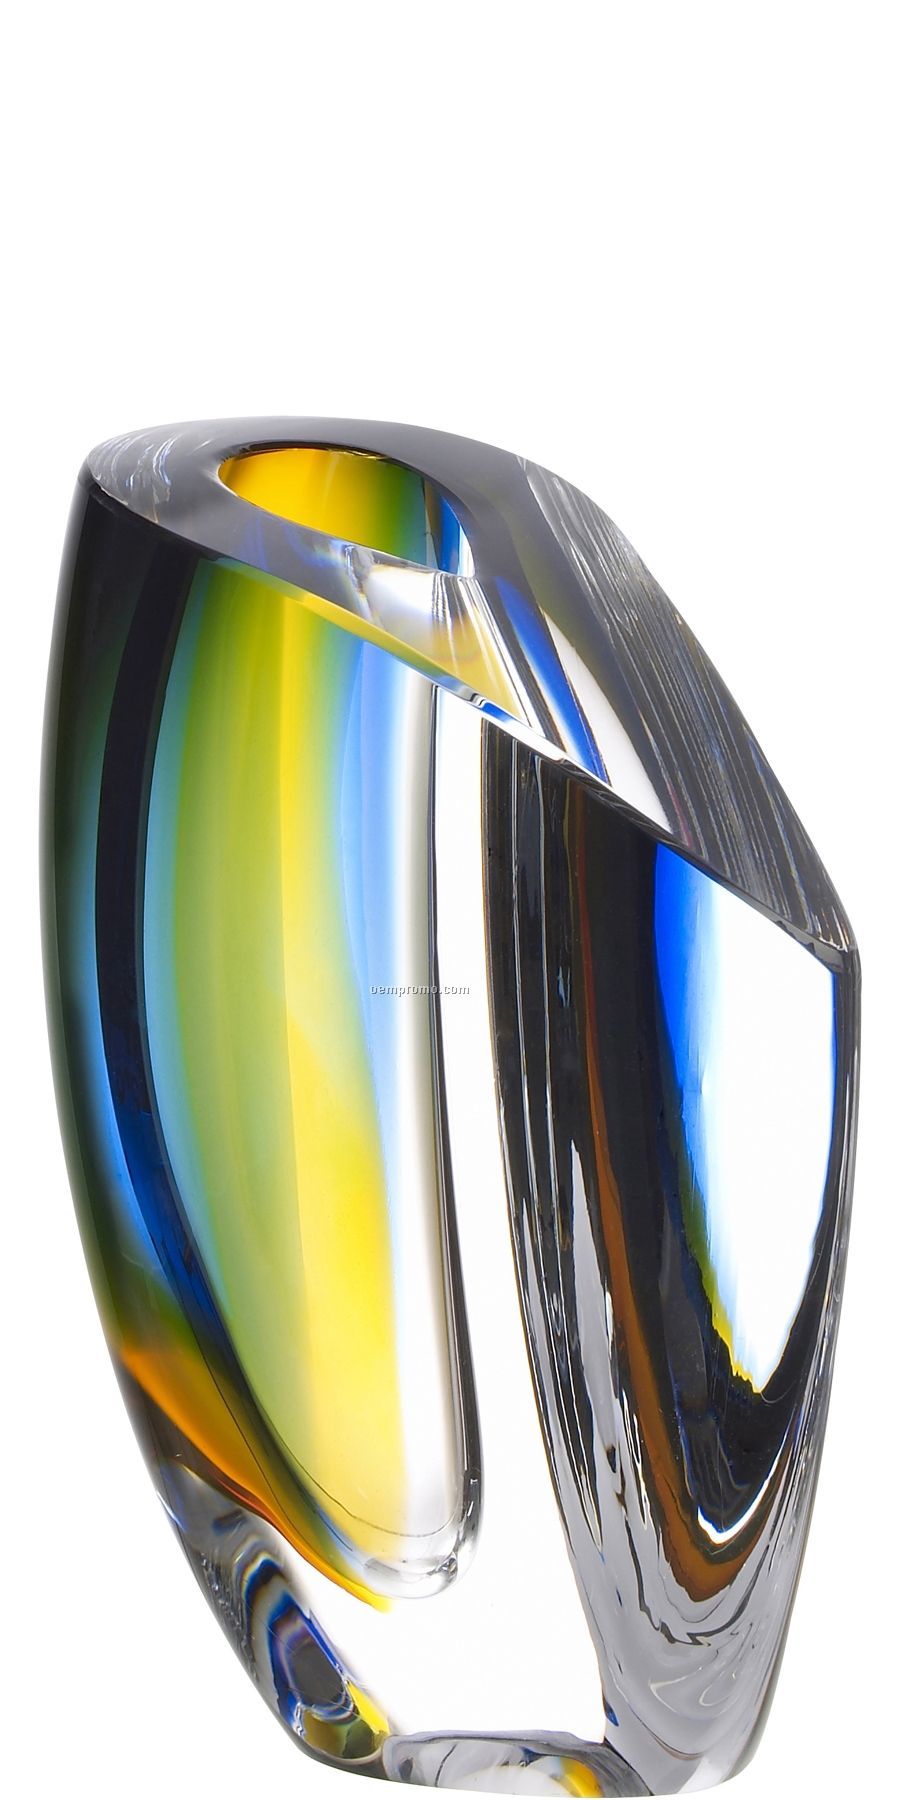 Mirage Small Glass Vase By Goran Warff (Blue & Amber)